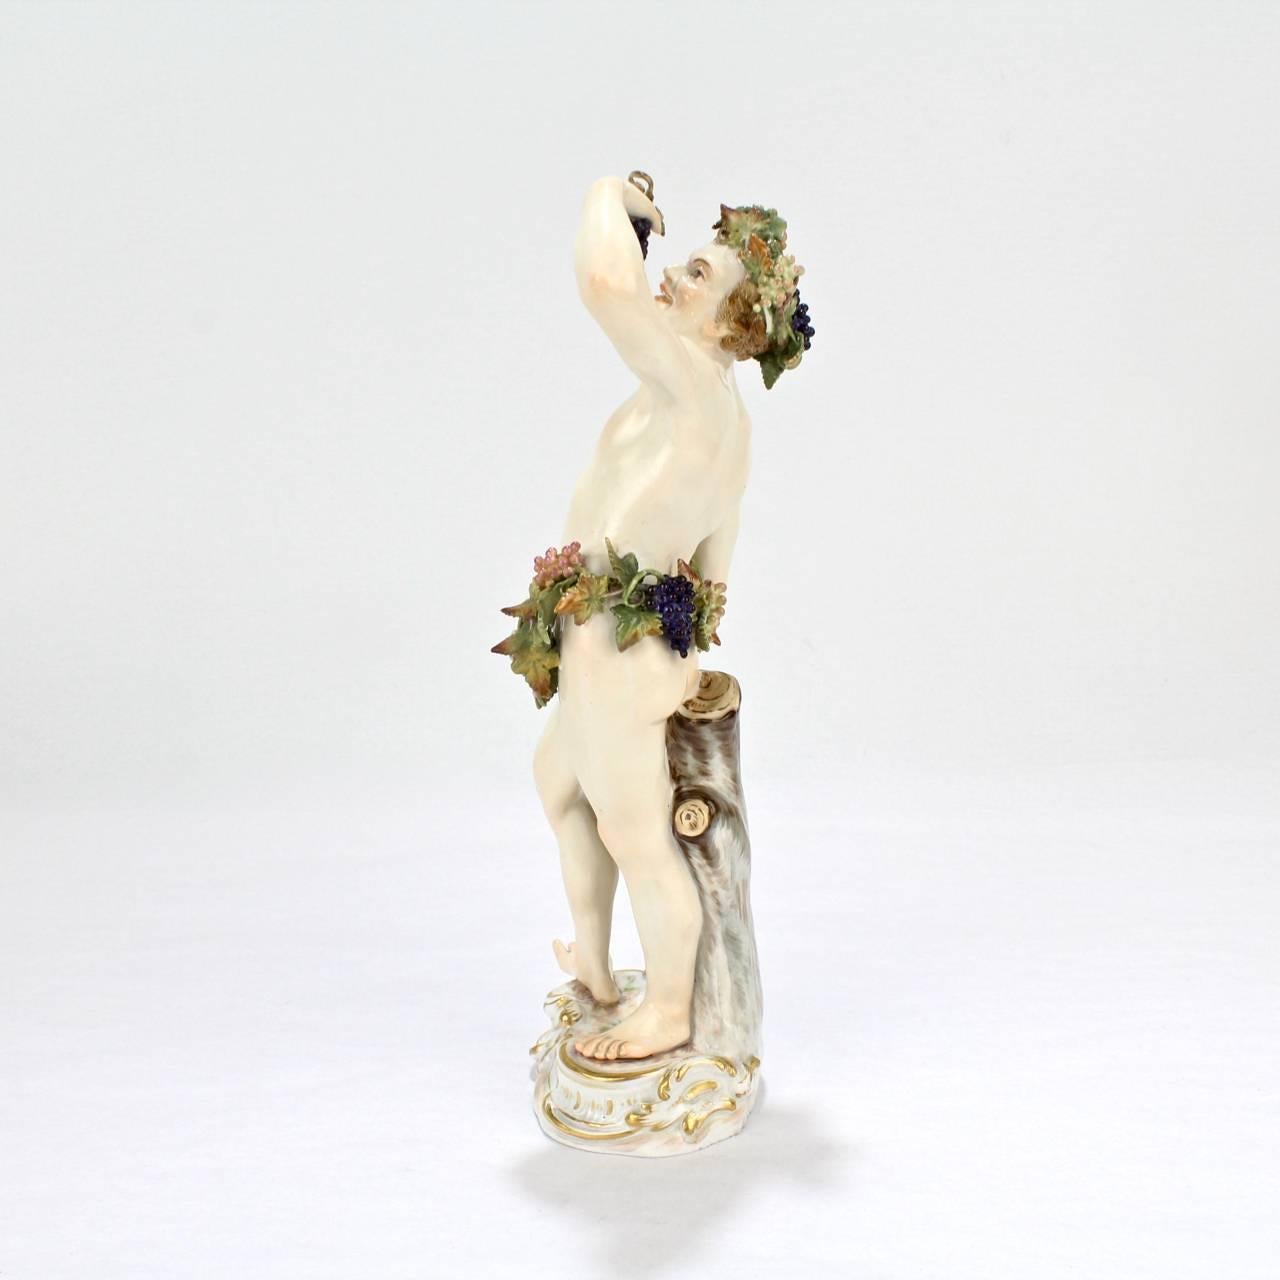 German Antique Meissen Porcelain Allegorical Figurine of Bacchus the God of Wine